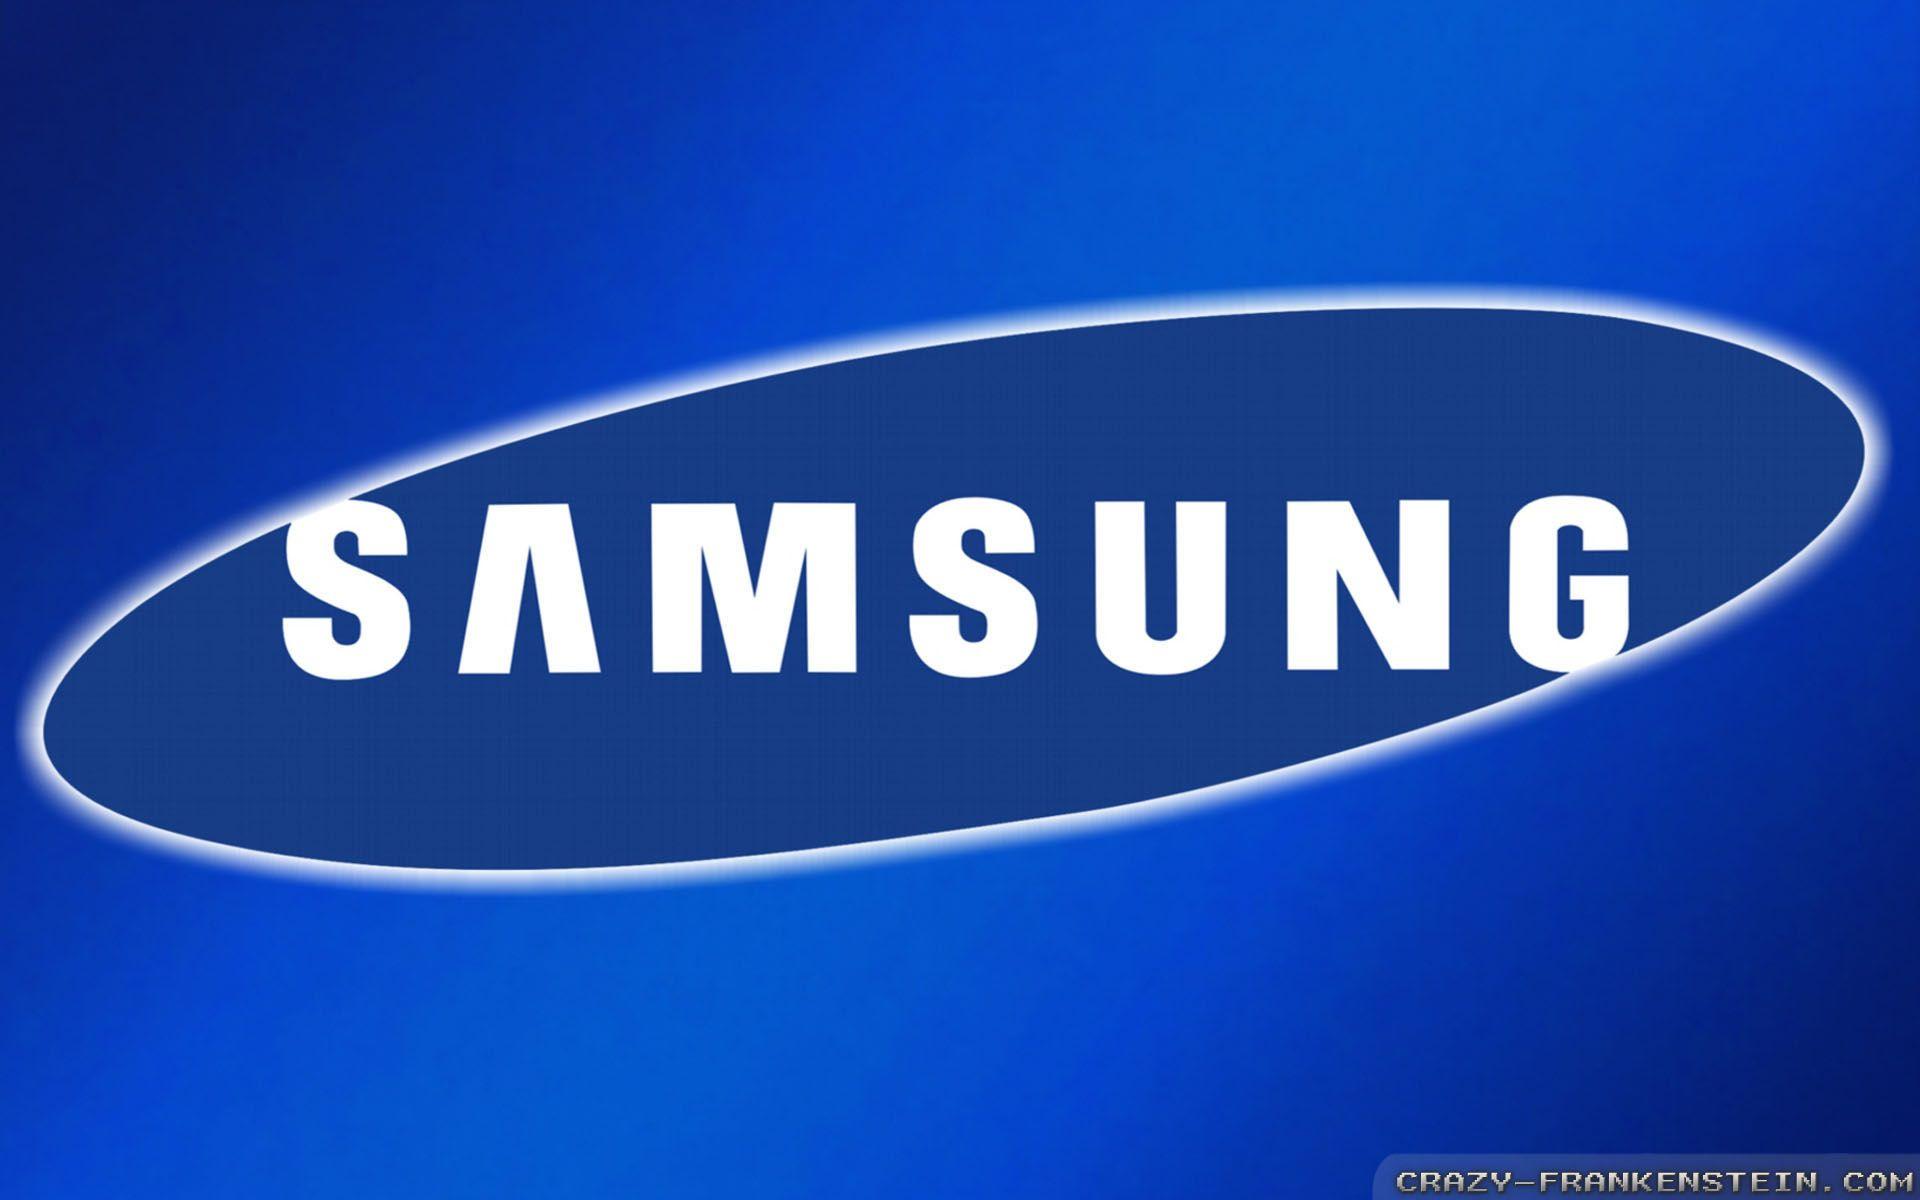 Samsuung Logo - Samsung Logo Wallpapers - Wallpaper Cave